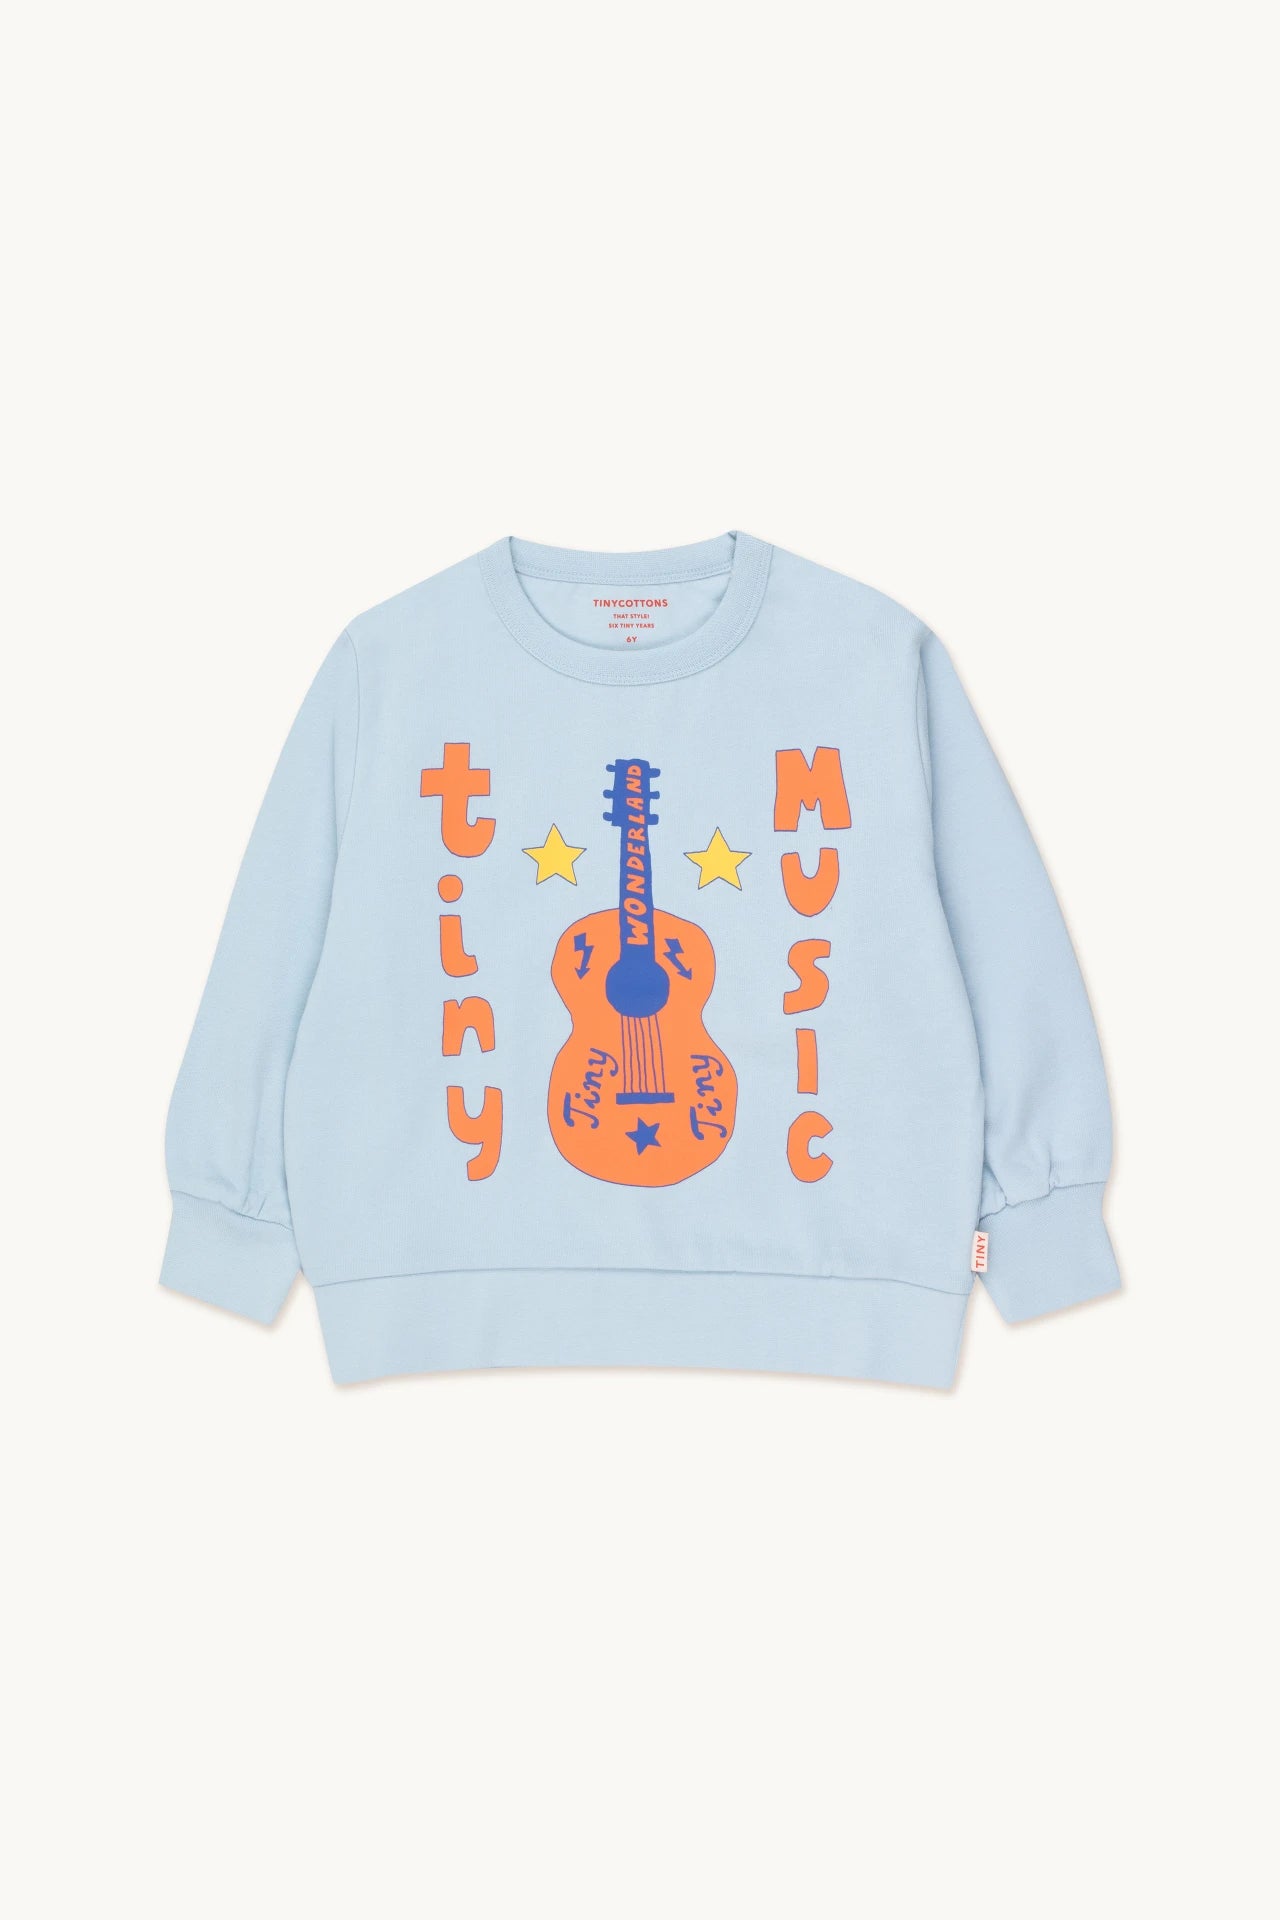 Tiny Cottons - Tiny Music Sweatshirt 